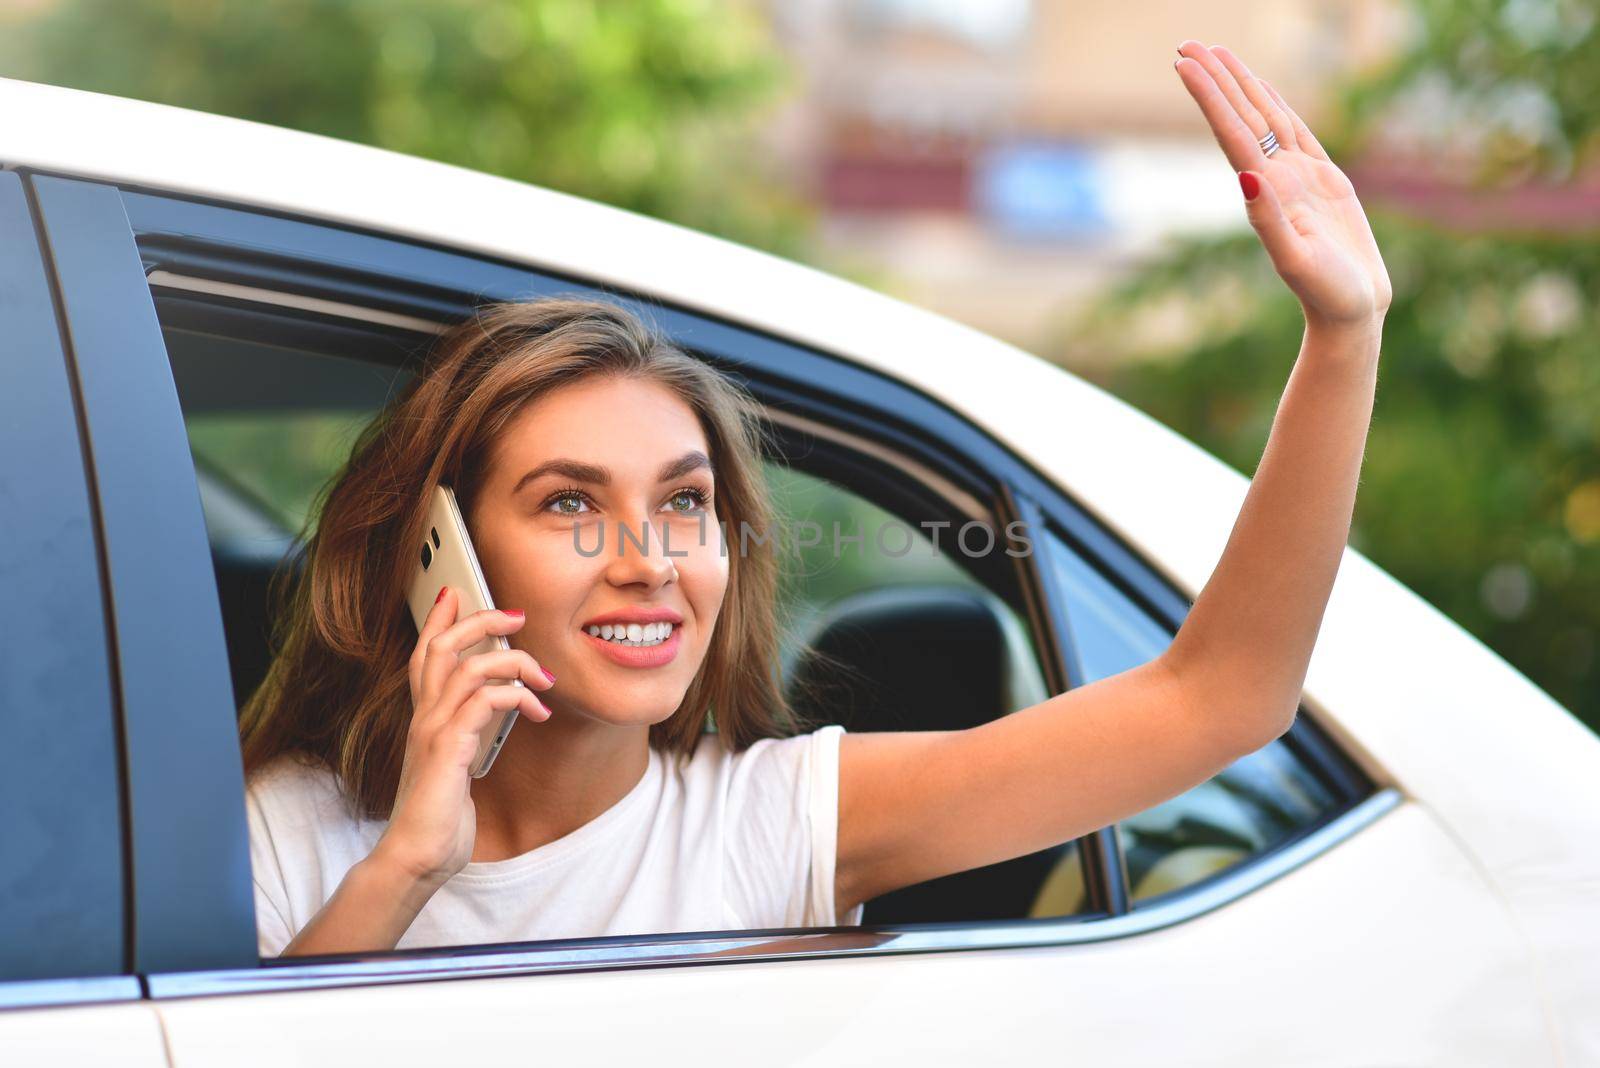 Woman peeking out of car window, woman peeking out of window and waving her hand